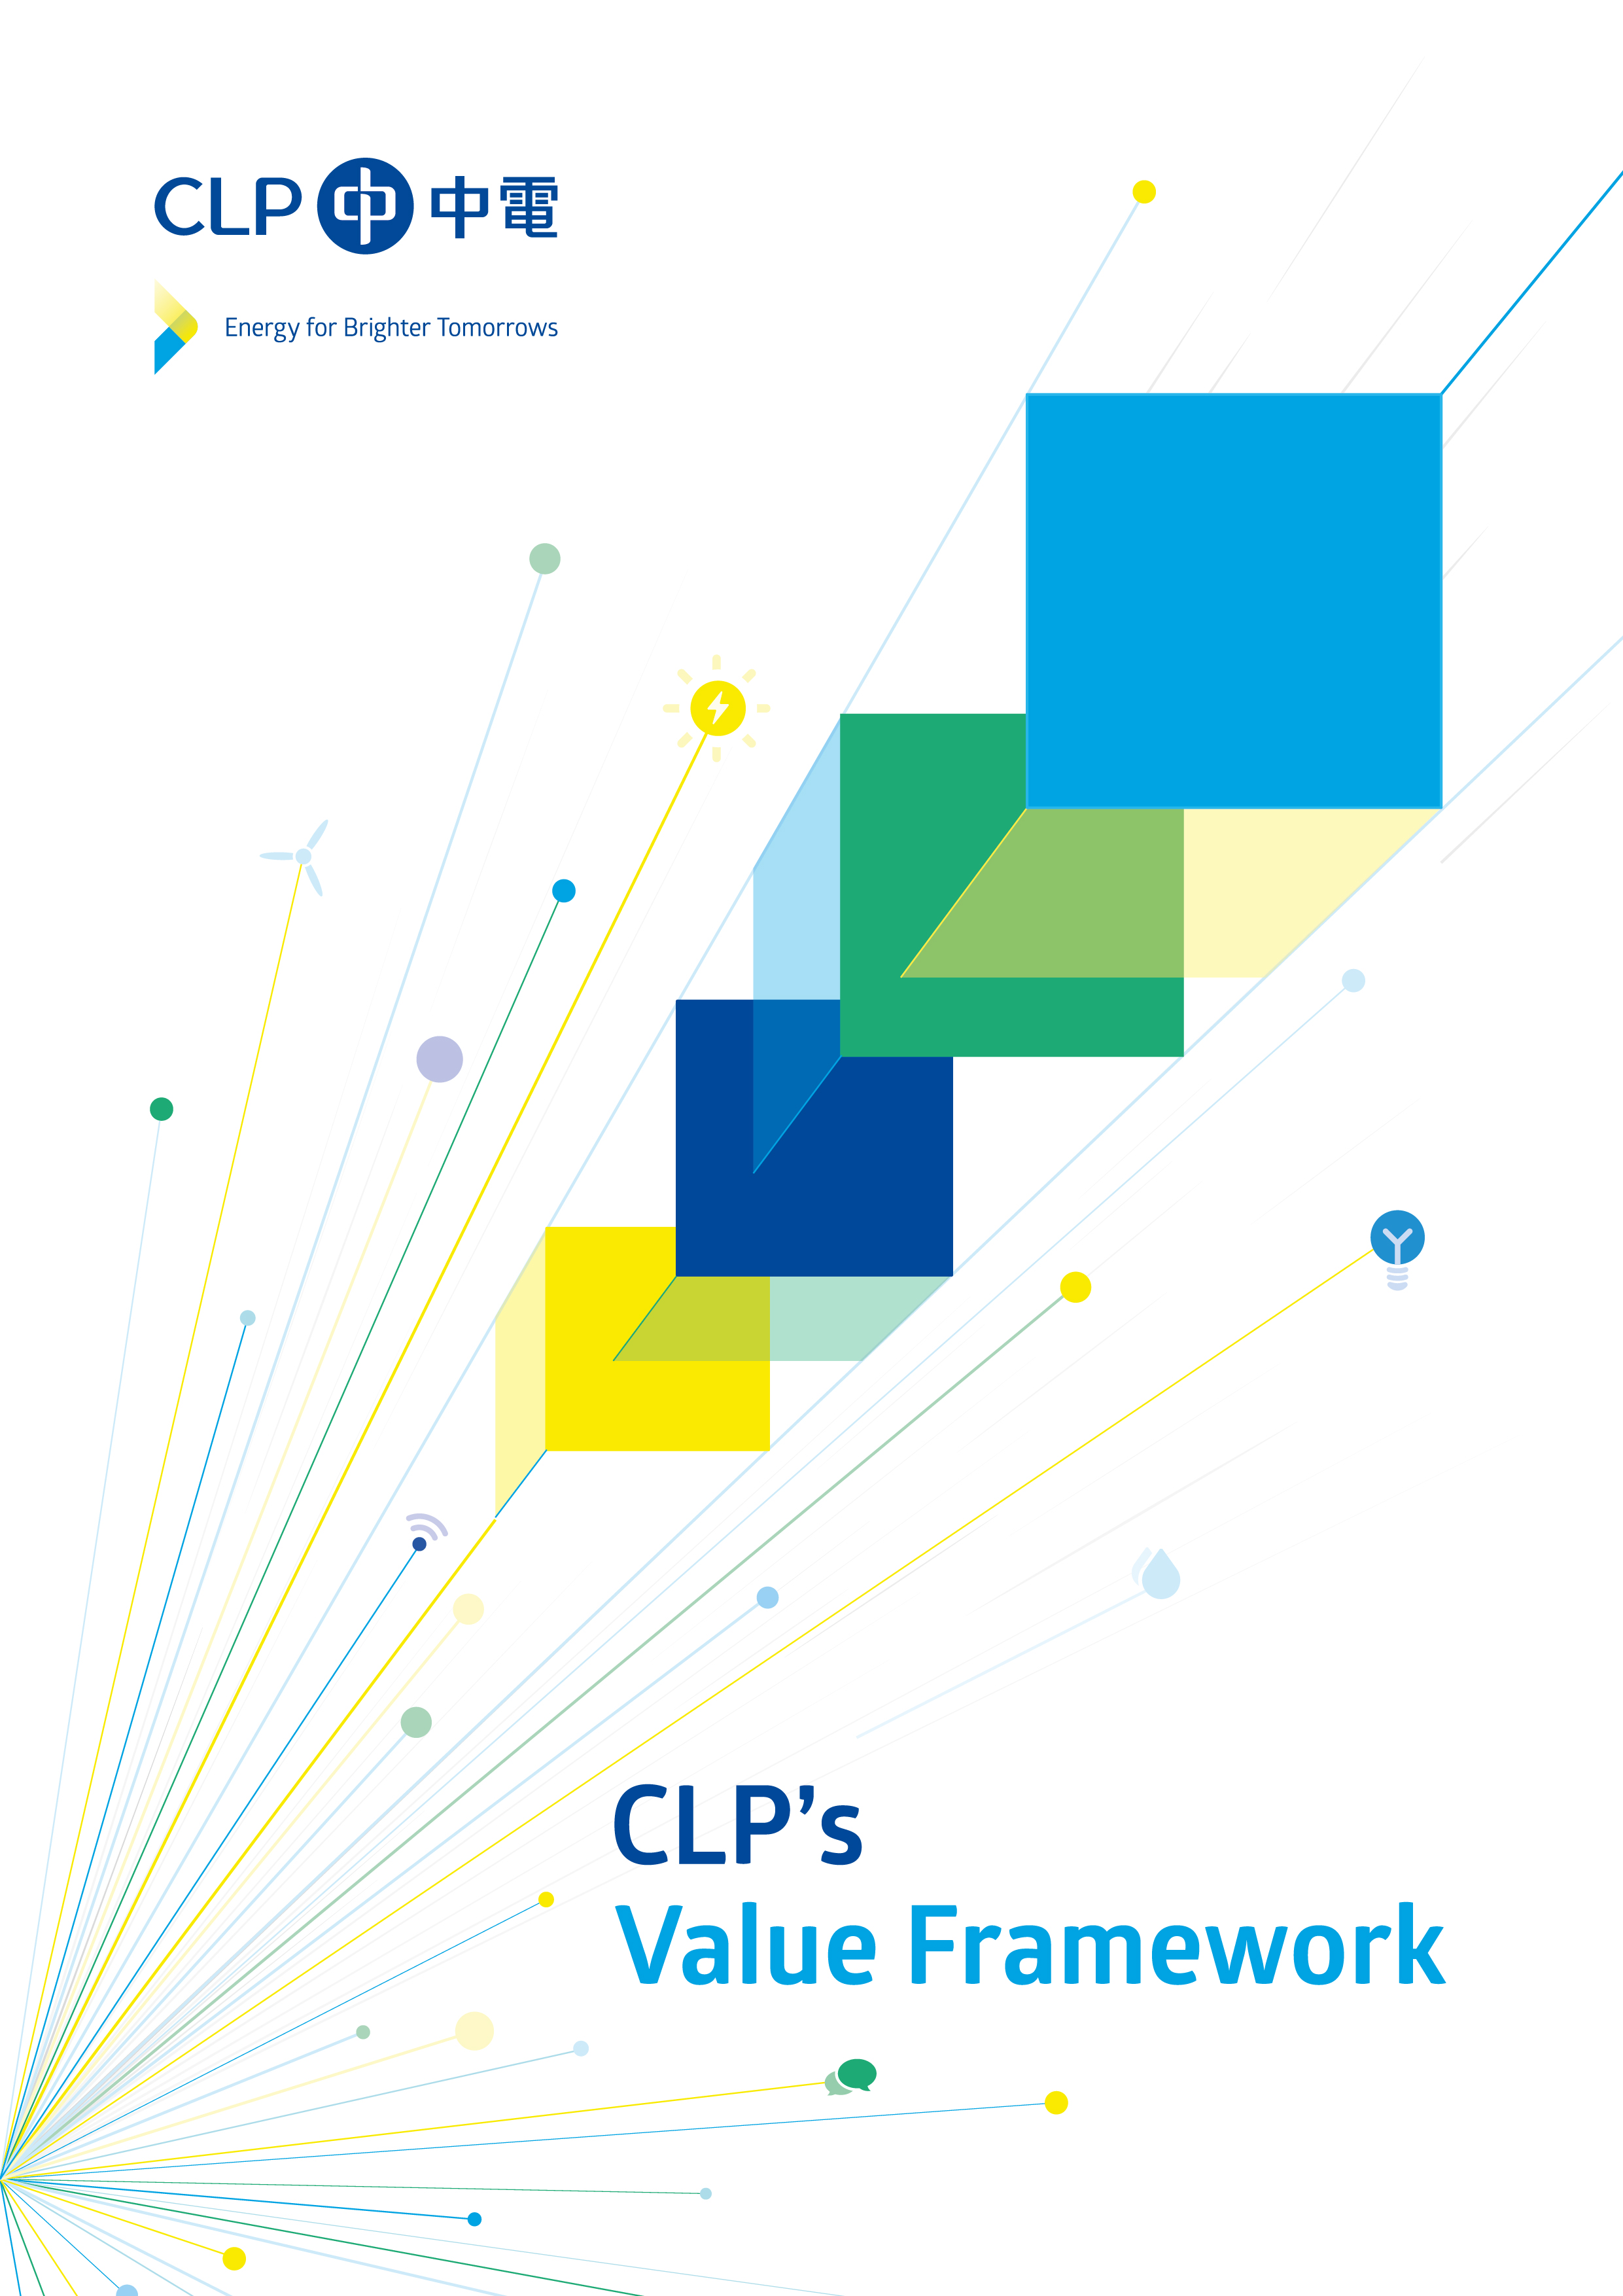 CLP's Value Framework